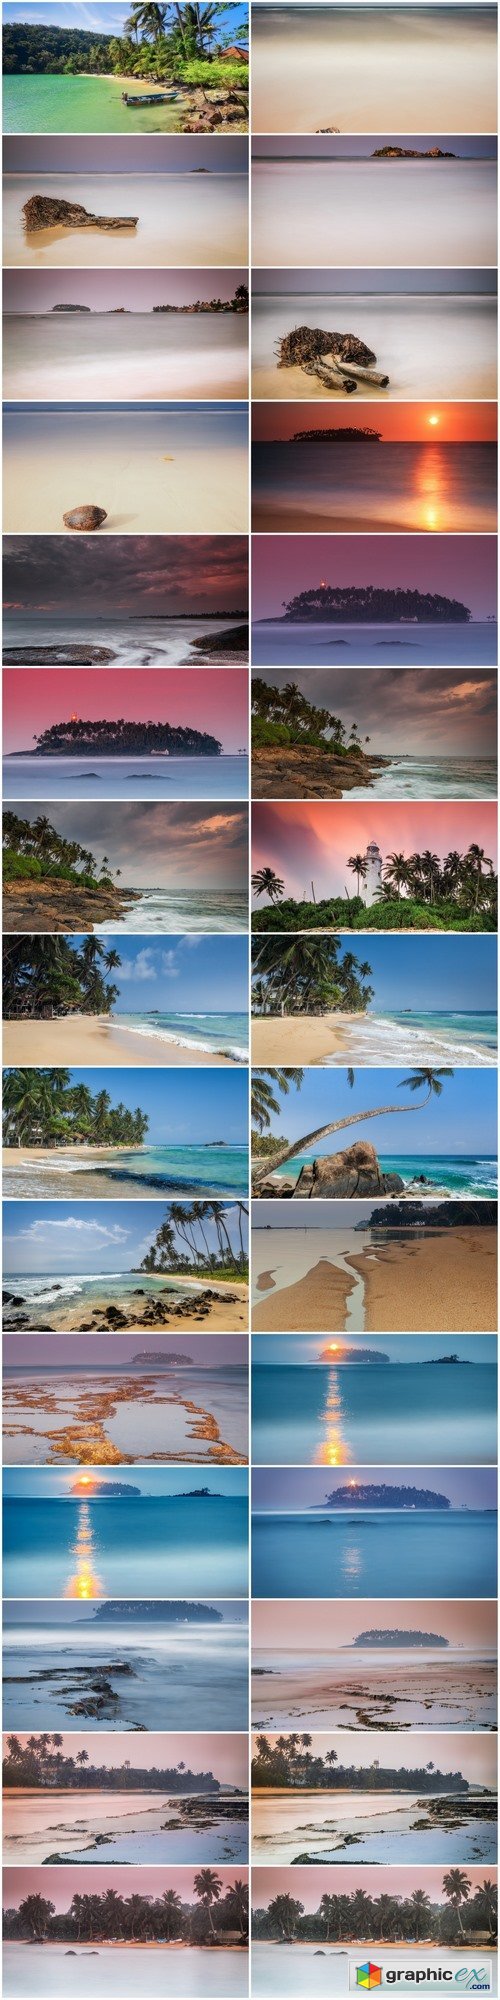 Sri Lanka. Beruwela. Beach Moragalla